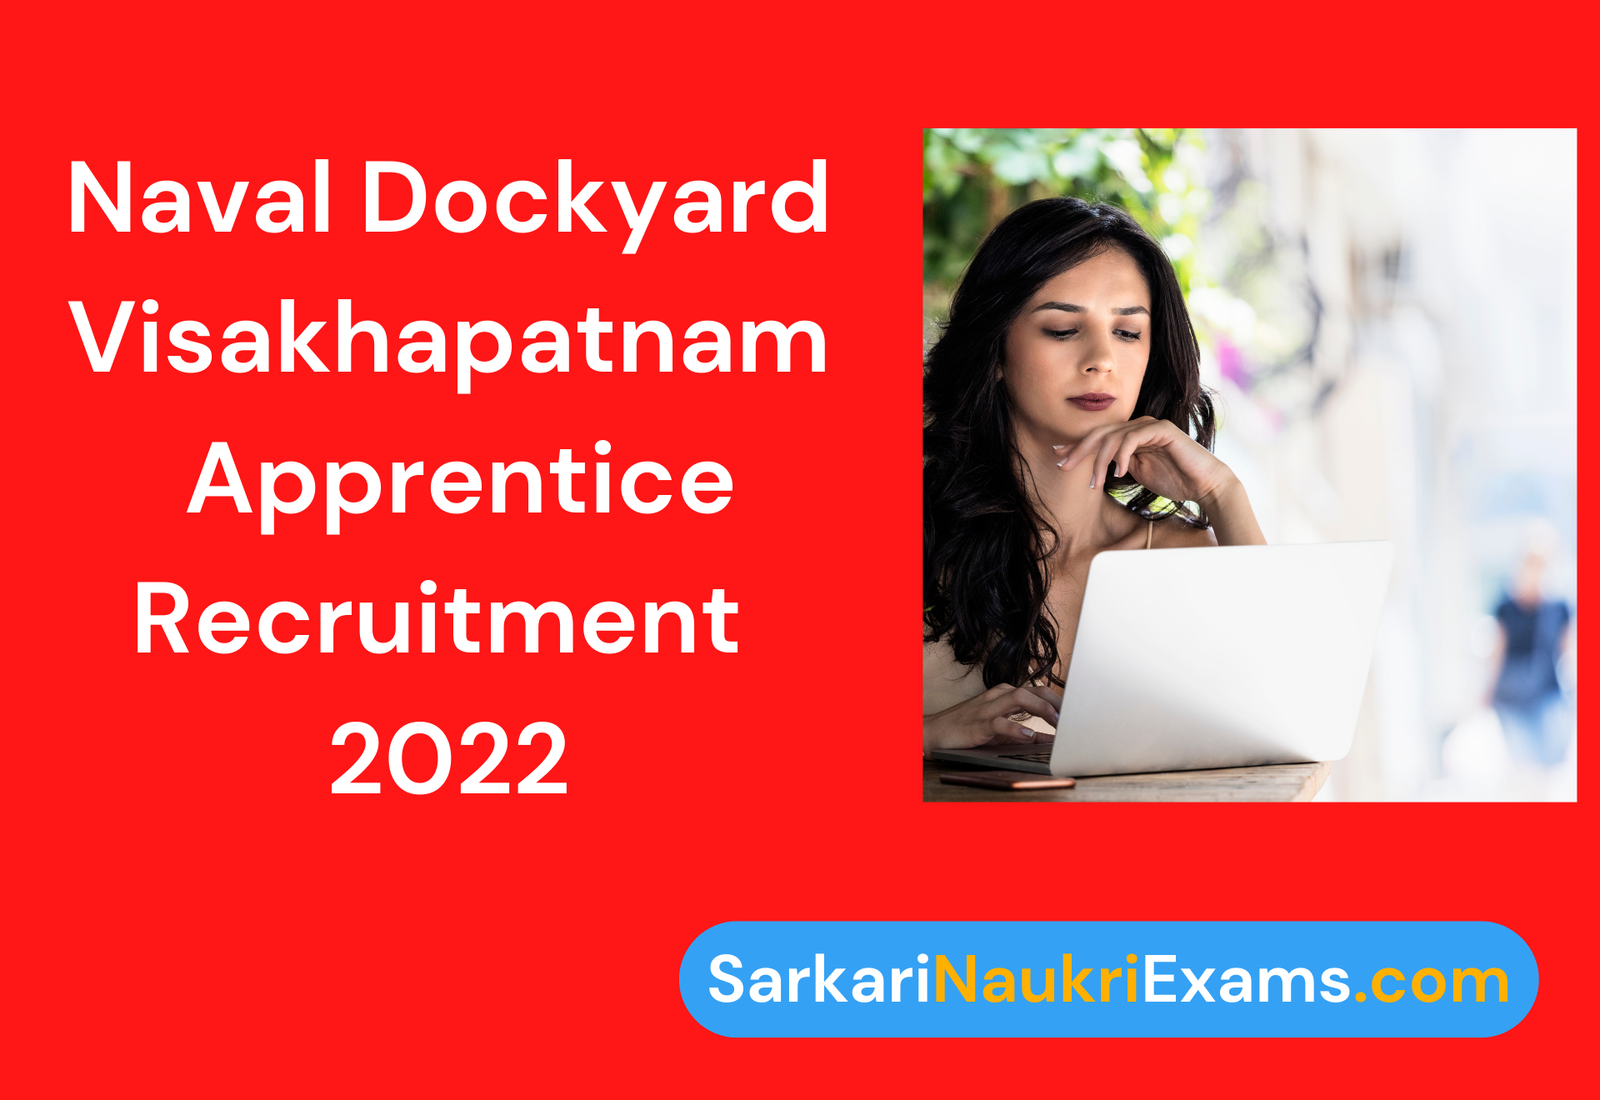 Naval Dockyard Visakhapatnam Apprentice Recruitment Form 2022 | New Latest Jobs